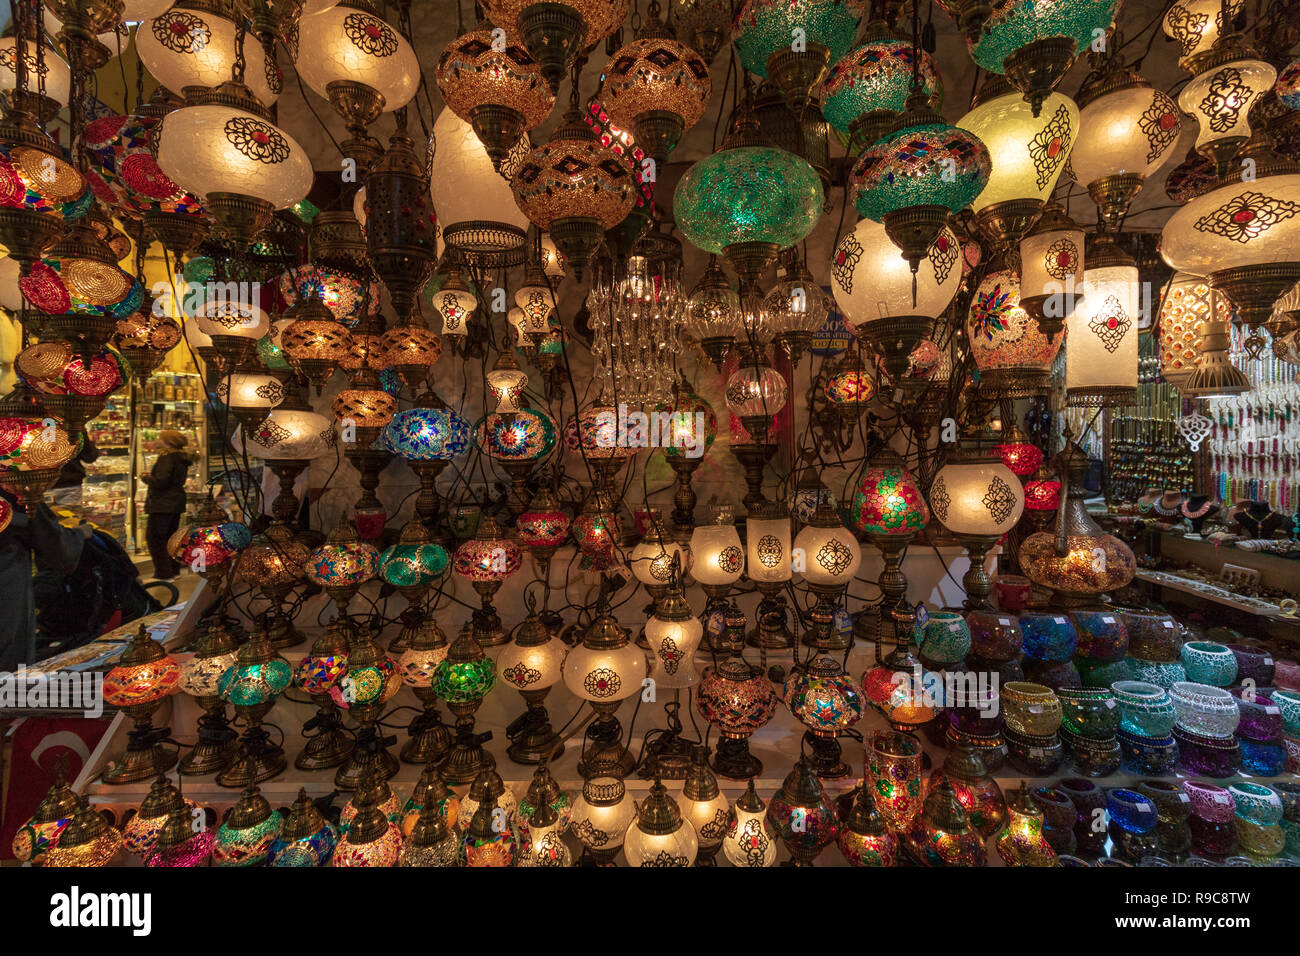 So I took a stroll through the Grand Bazaar in Istanbul : r/travel